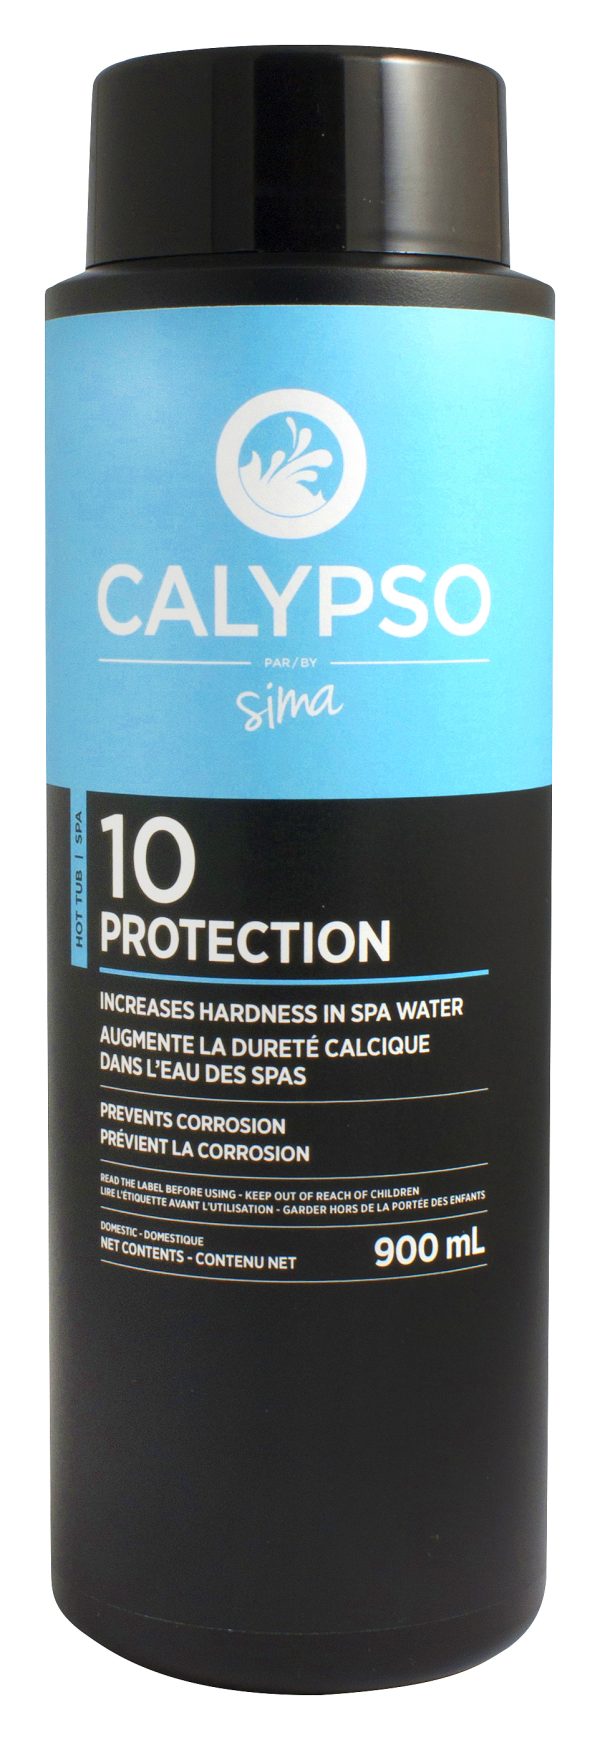 Calypso Protection #10 900ML - Spa products - Spa maintenance - Sima POOLS & SPAS